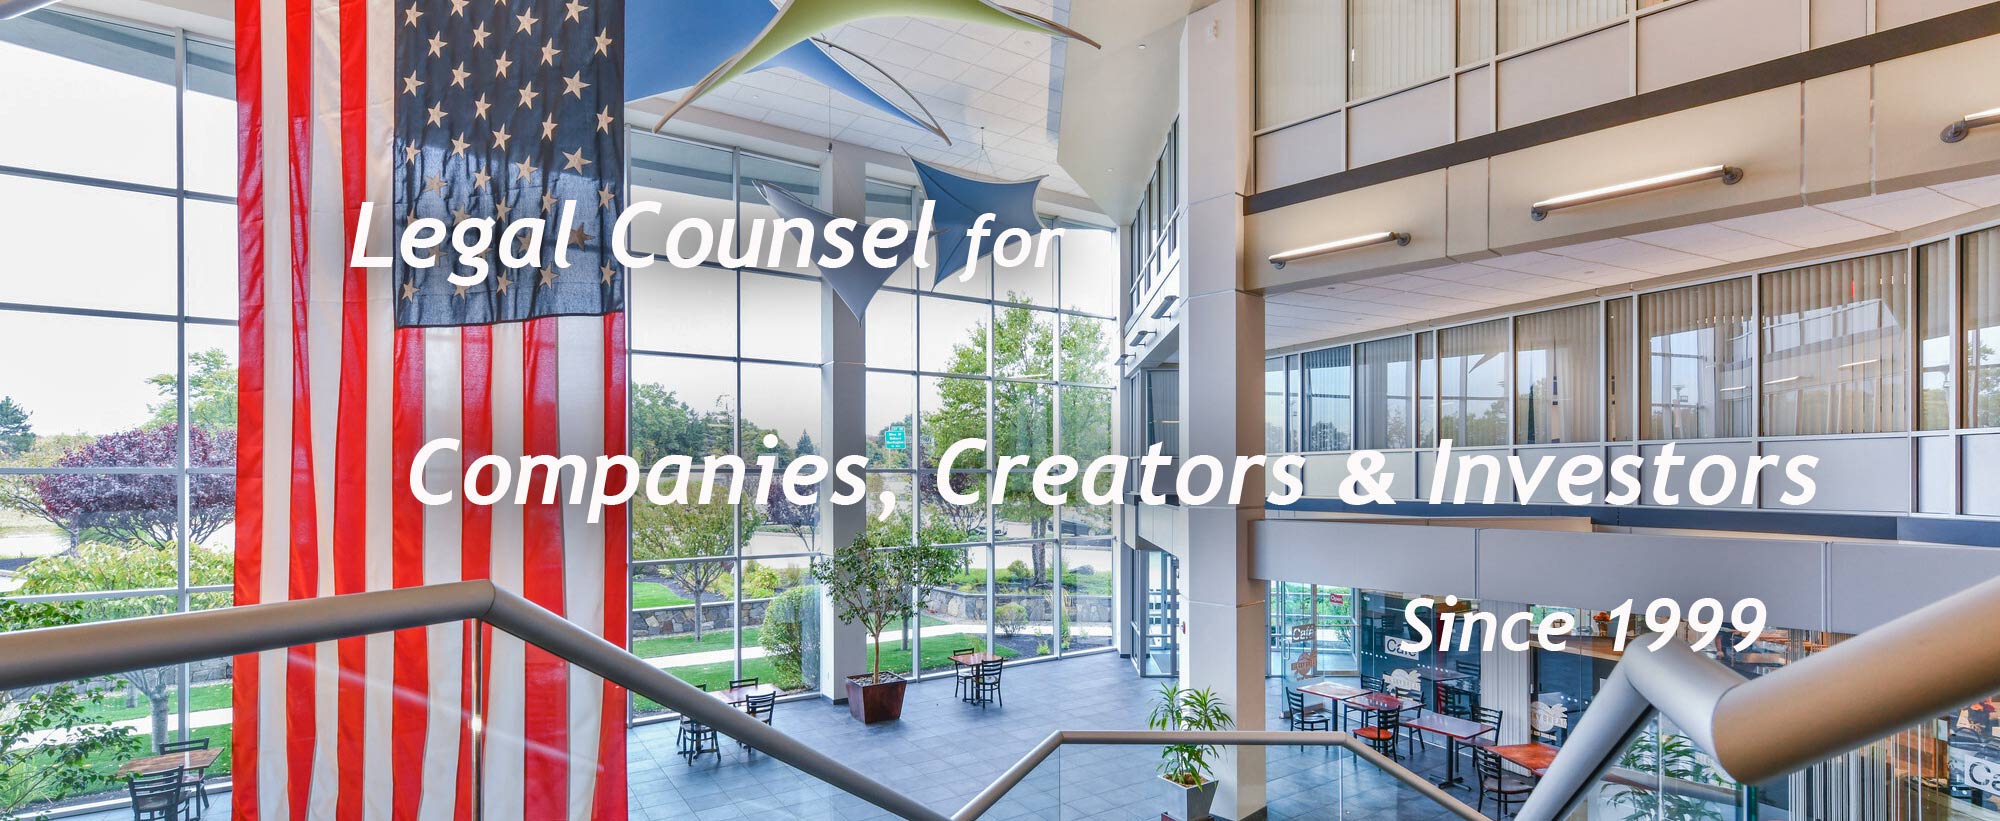 William Swiggart Legal Counsel for Companies, Creators and Investors